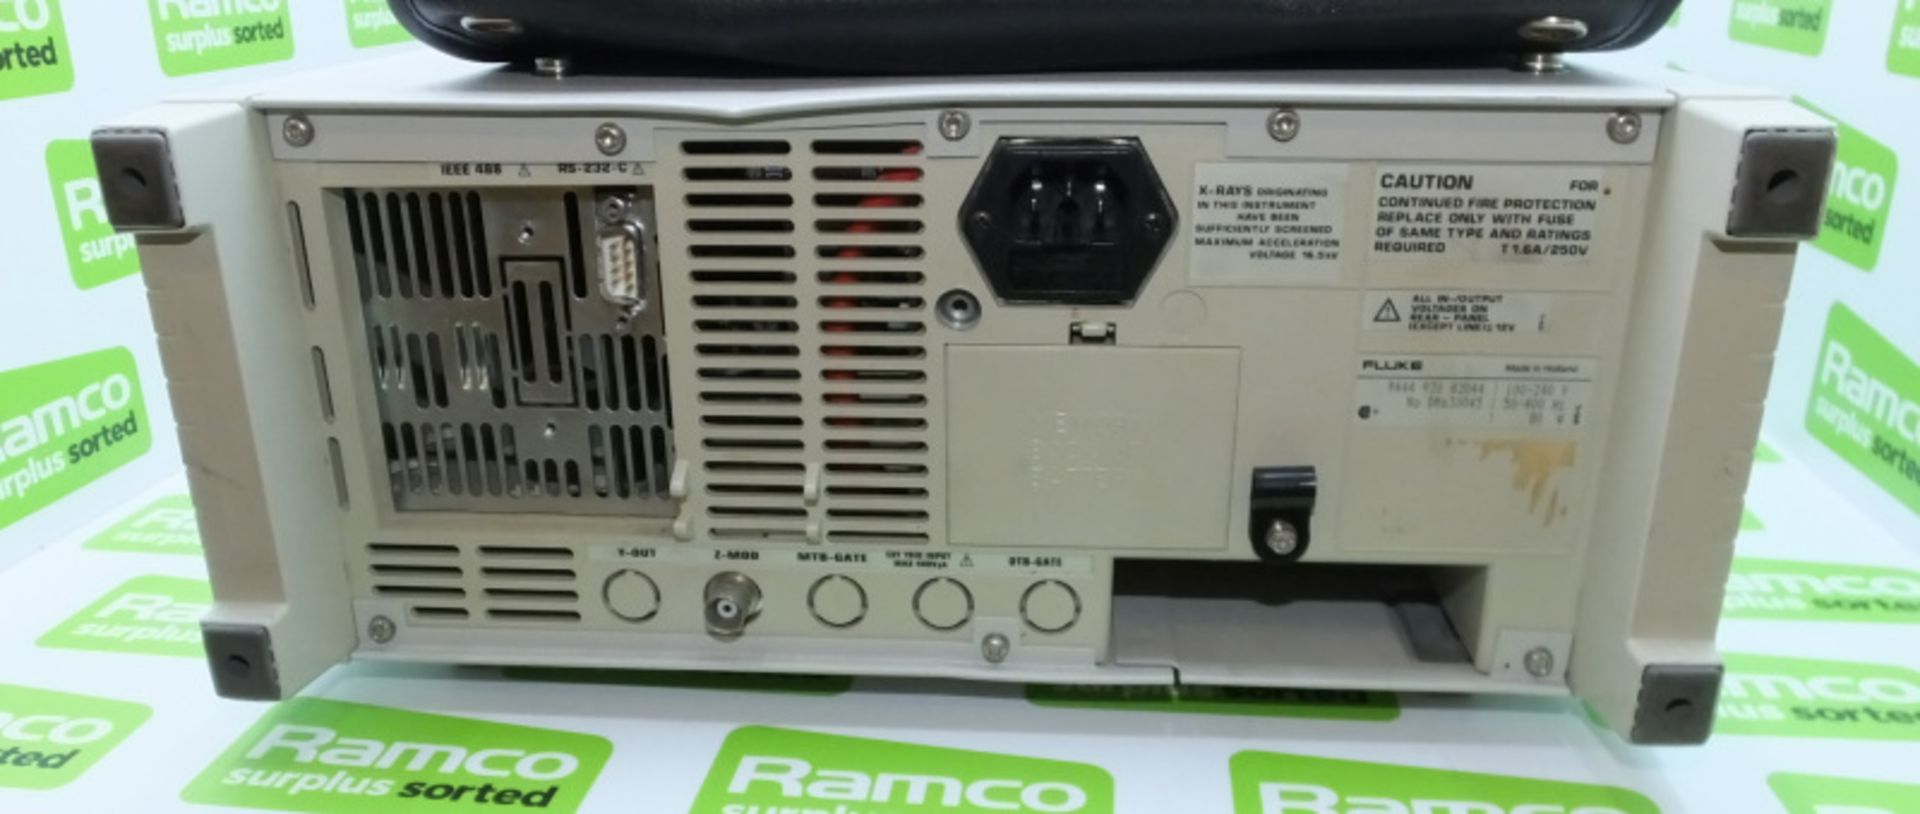 Fluke PM3082 Oscilloscope 100mhz - 3x 10:1 passive probes, 1x 1:1 passive probes, manual, cable, 2x - Image 3 of 6